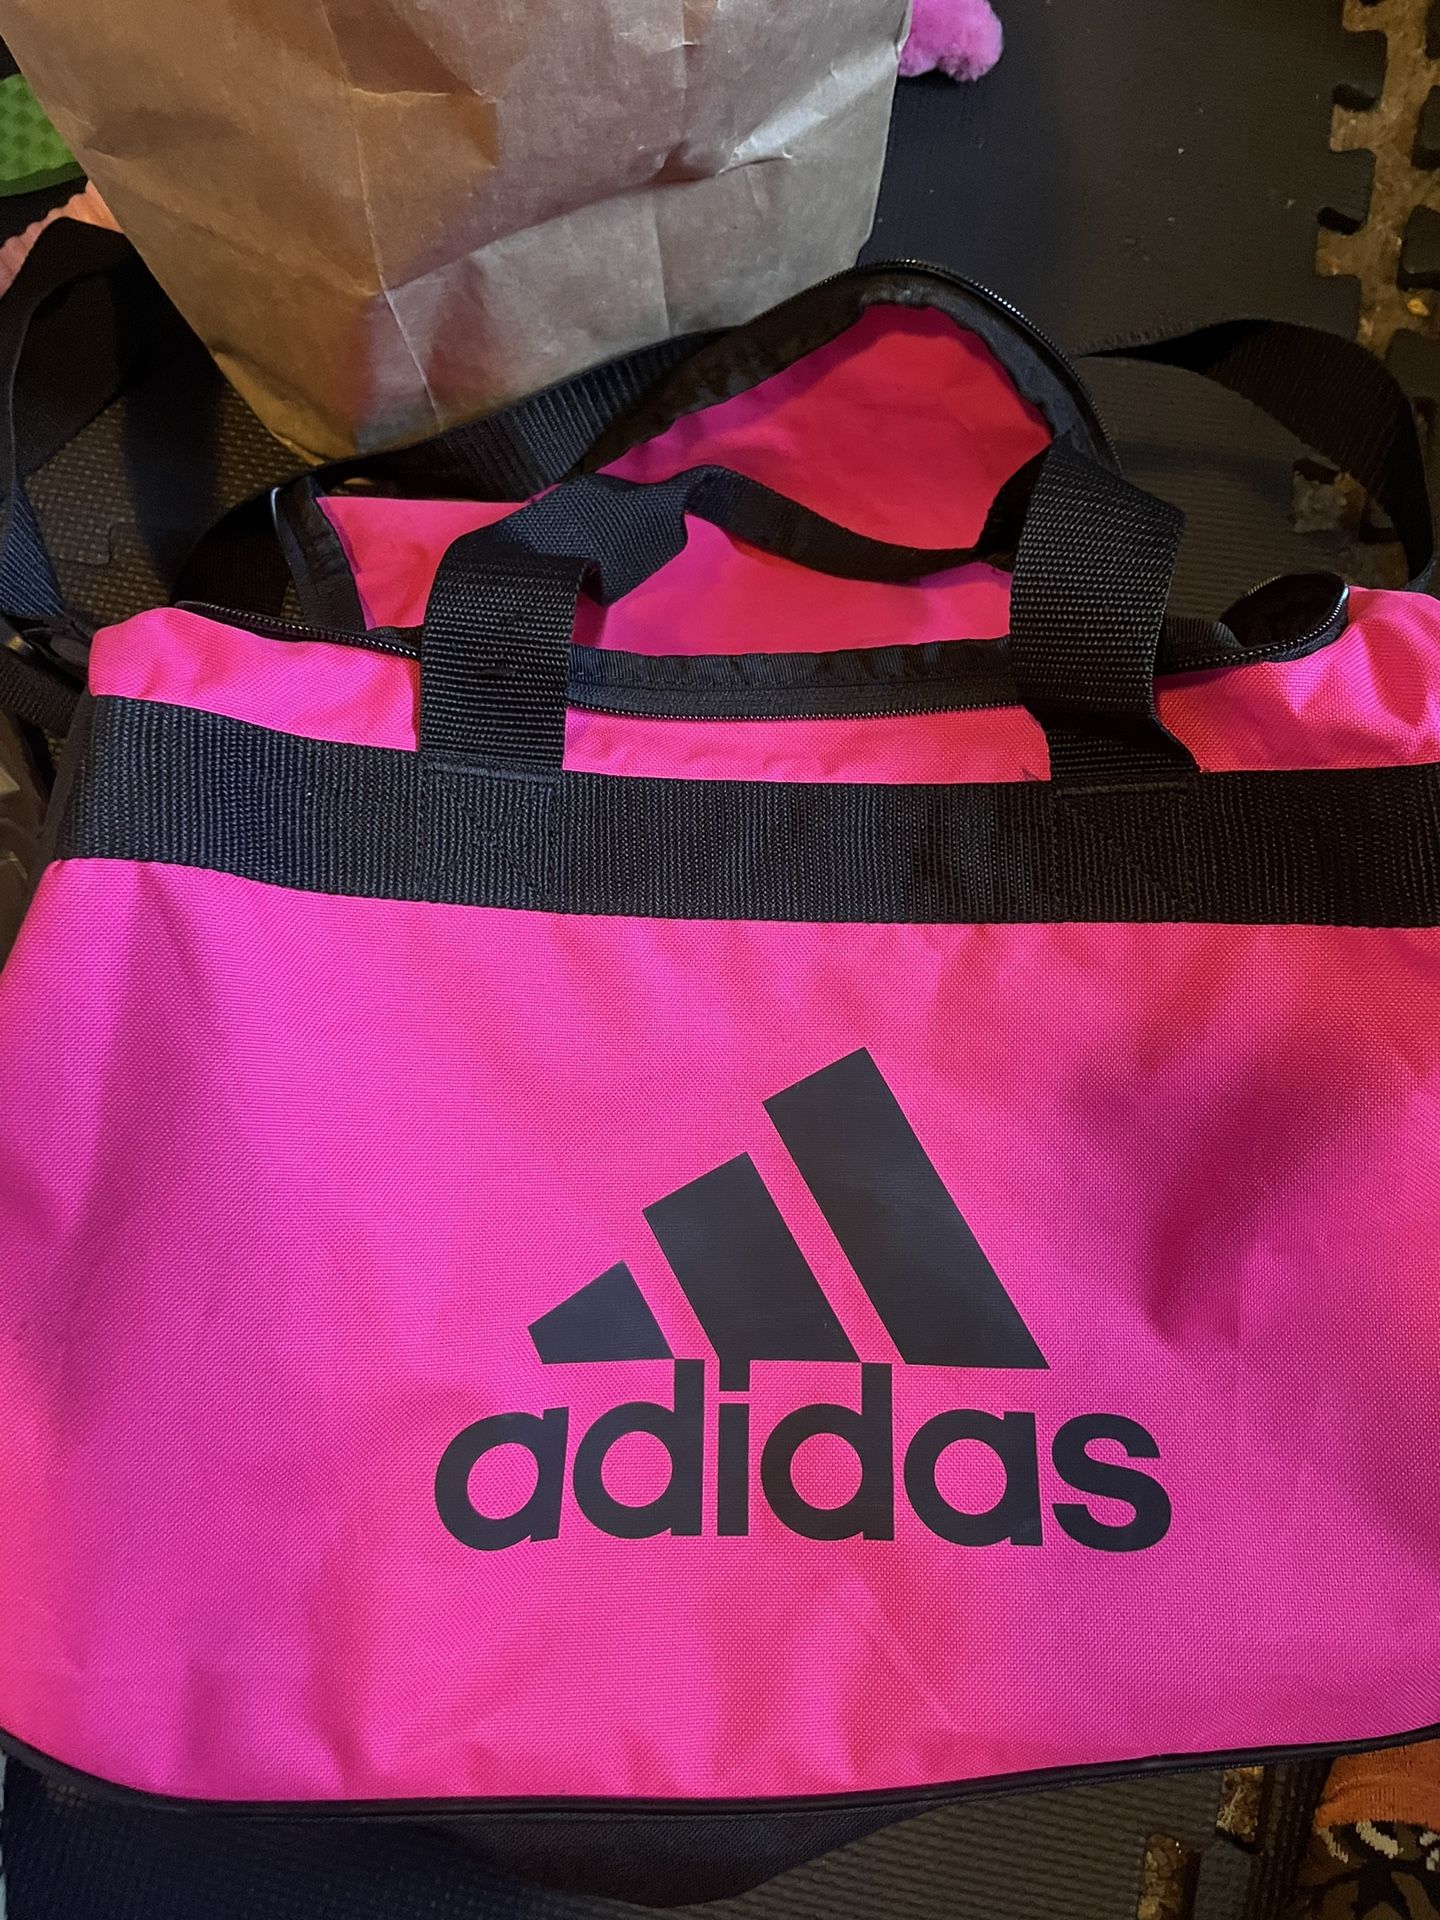 adidas pink duffle new